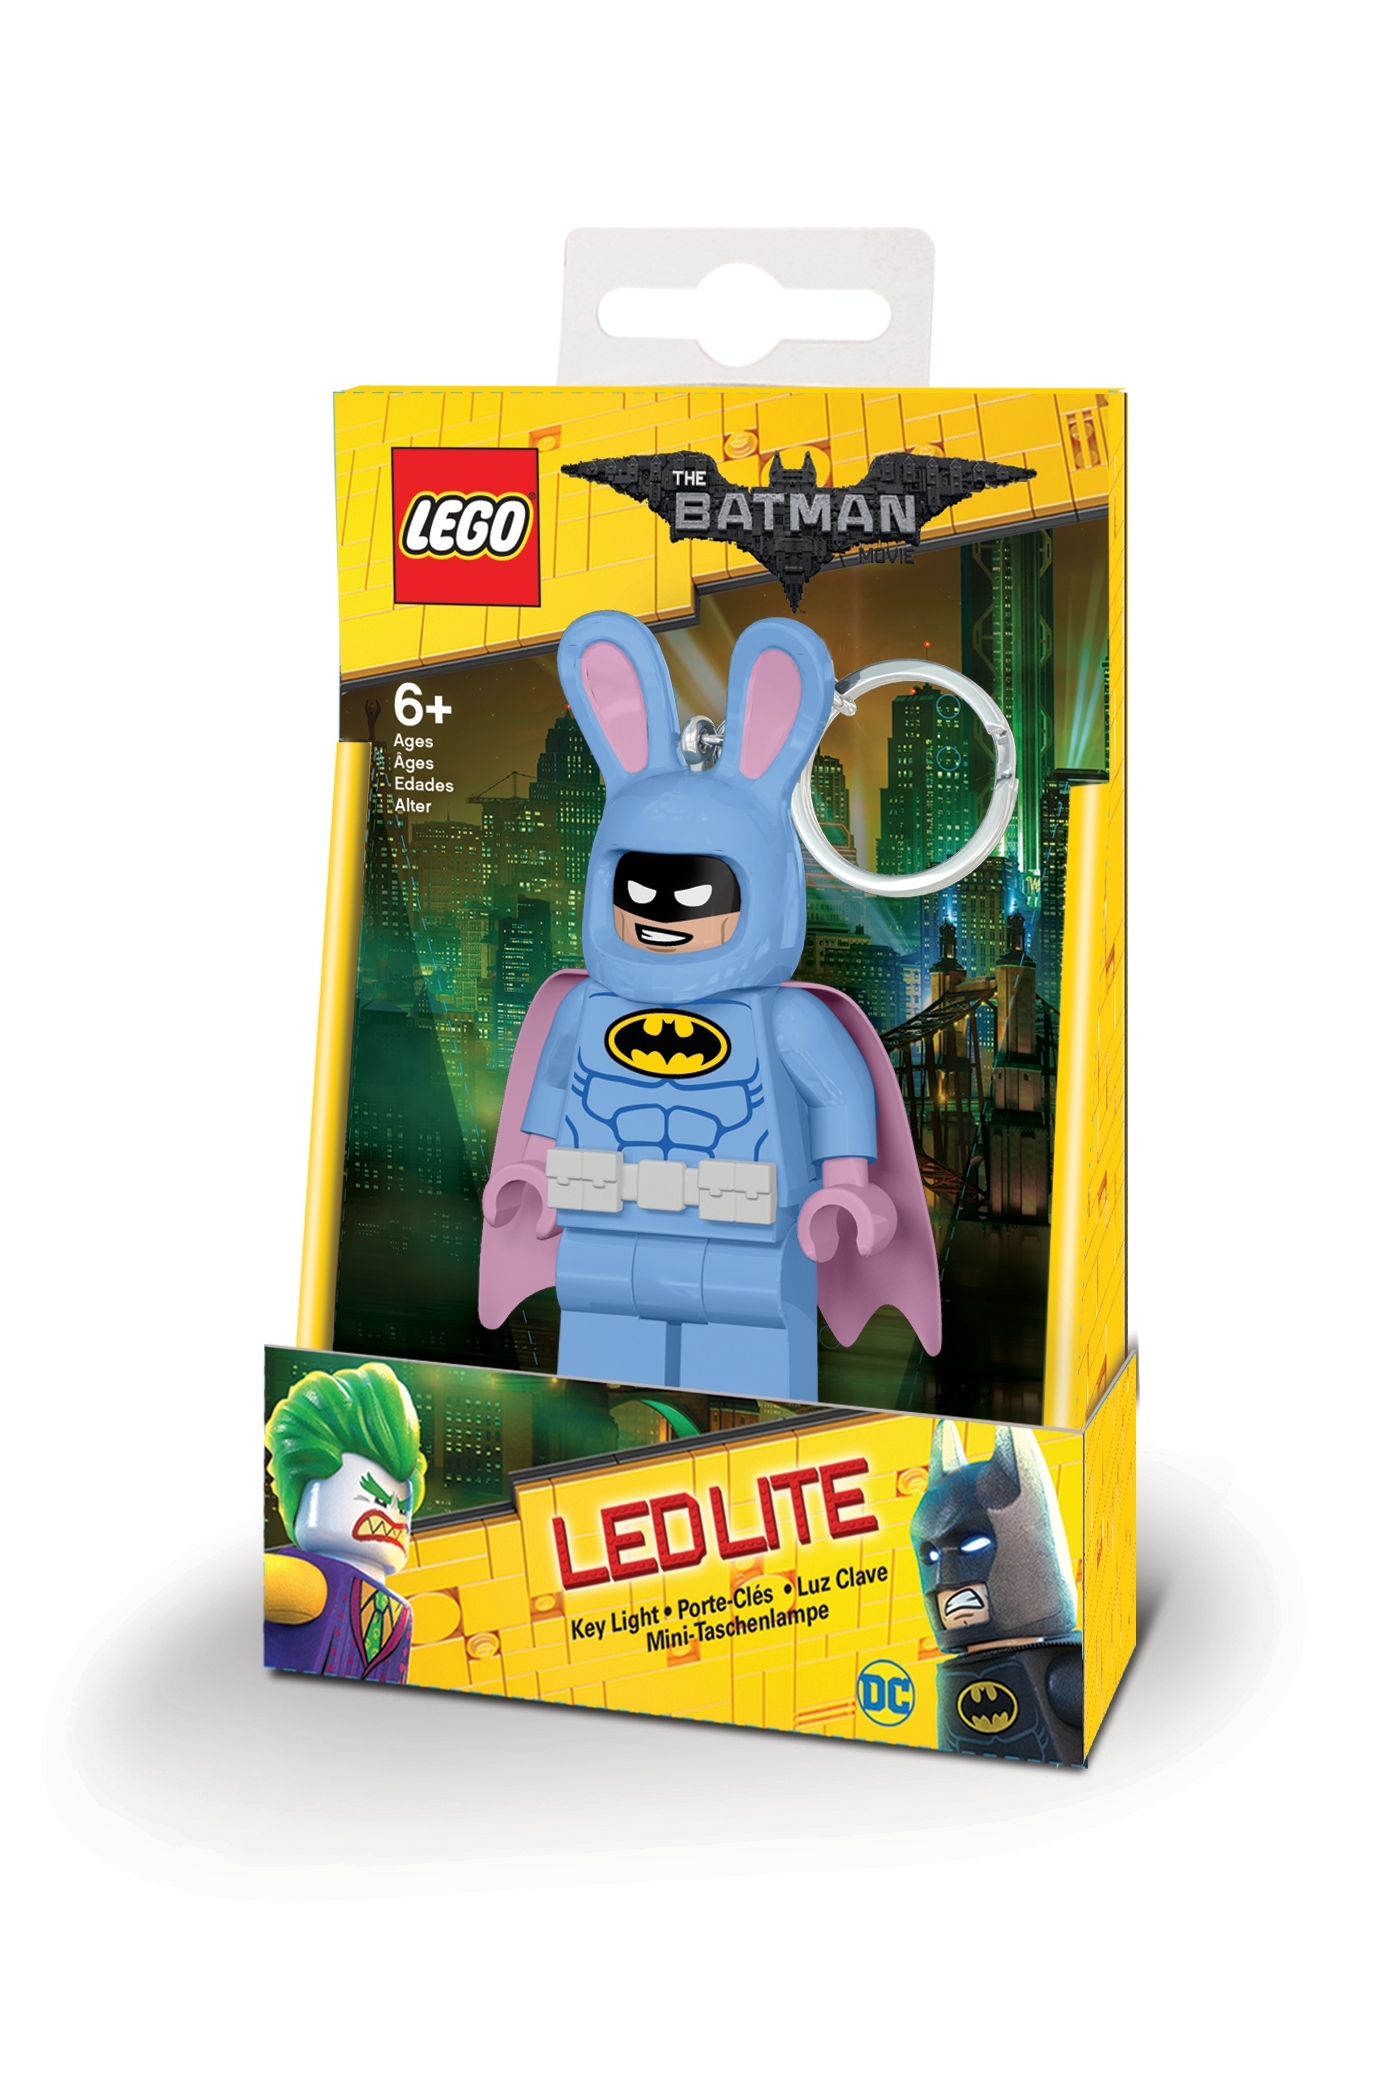 THE LEGO® BATMAN MOVIE Easter Bunny Batman™ Key Light 5005317 THE LEGO® BATMAN MOVIE | Buy online at the Official LEGO® Shop US